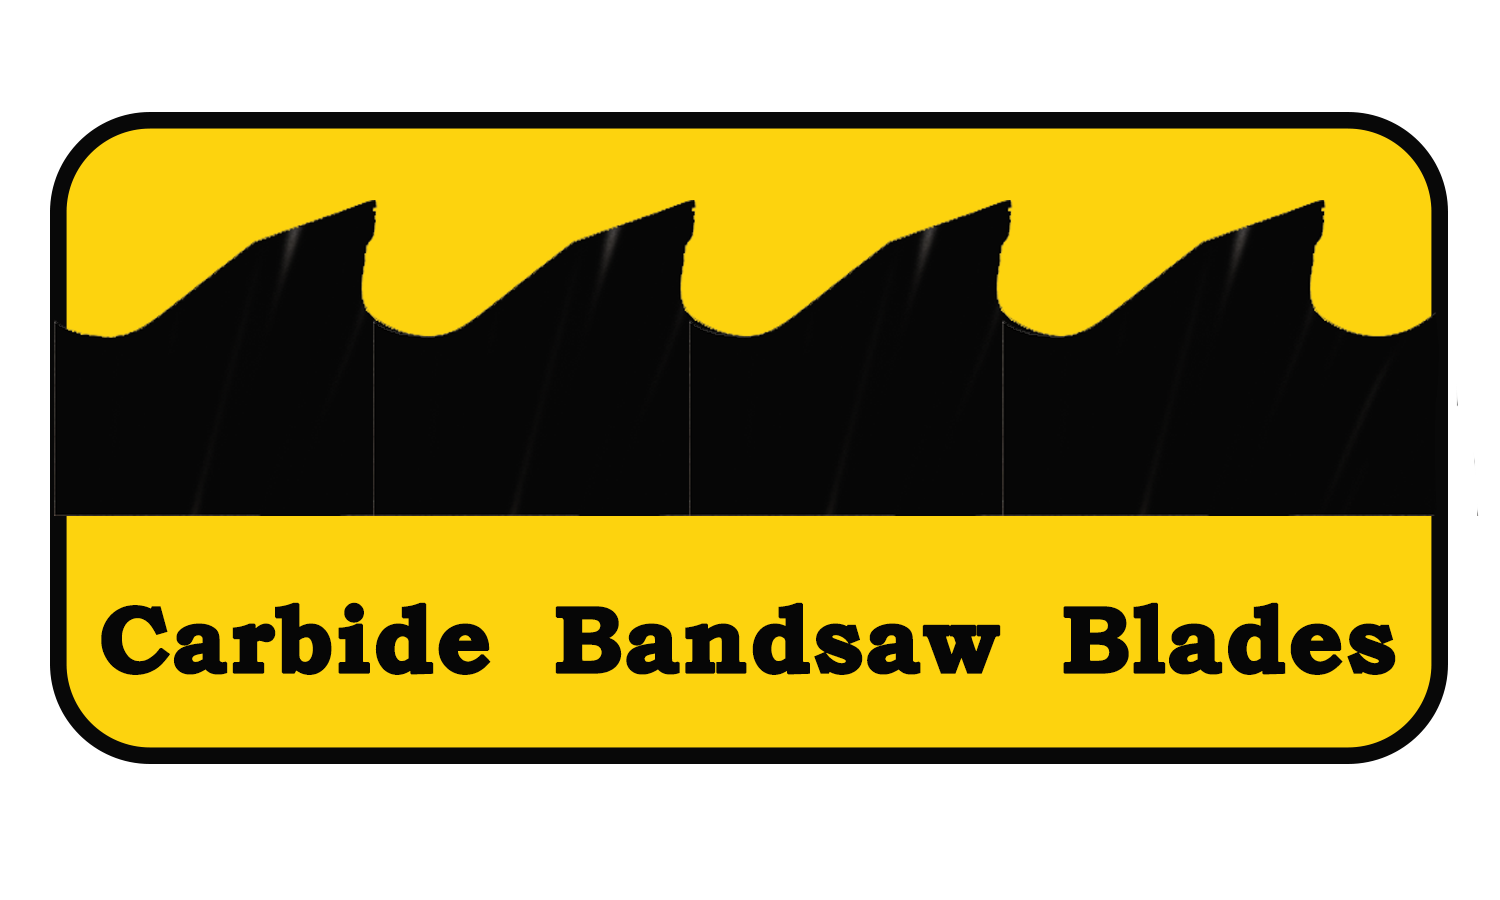 Carbide Bandsaw Blade  Alkem Industrial Supplies Bandsaw Blades spcialist in Brisbane Queensland Australia Engineering supplies Tools